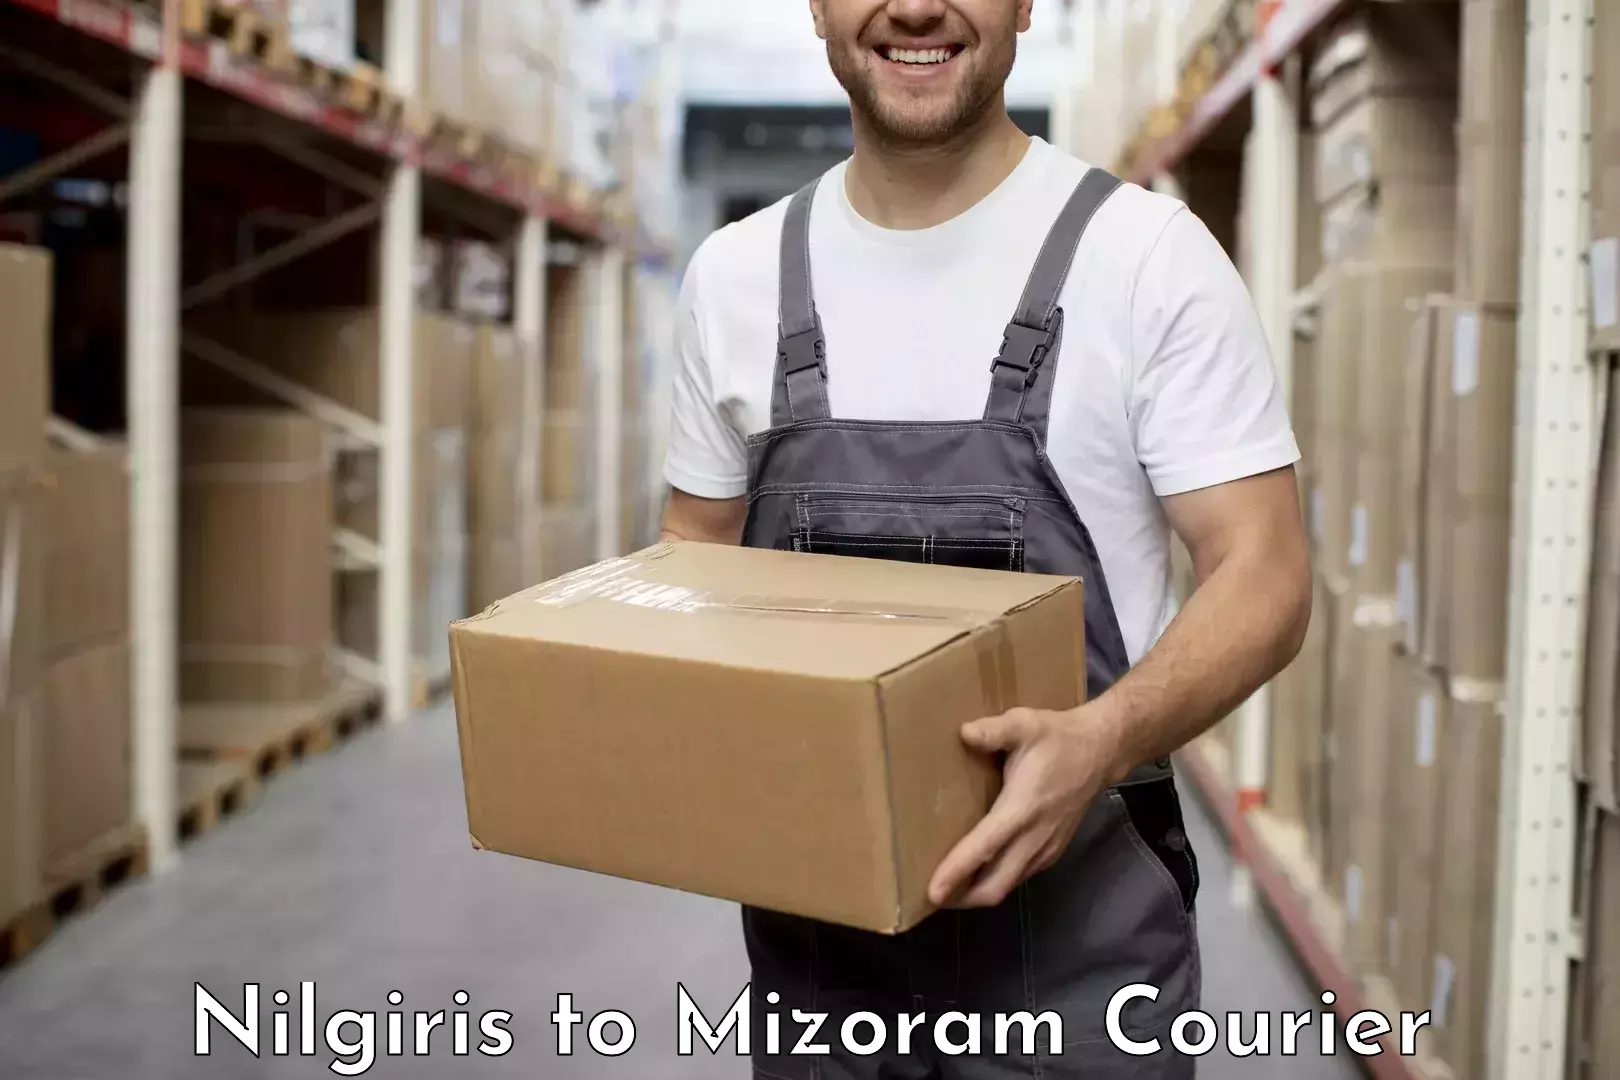 Efficient parcel service Nilgiris to Aizawl